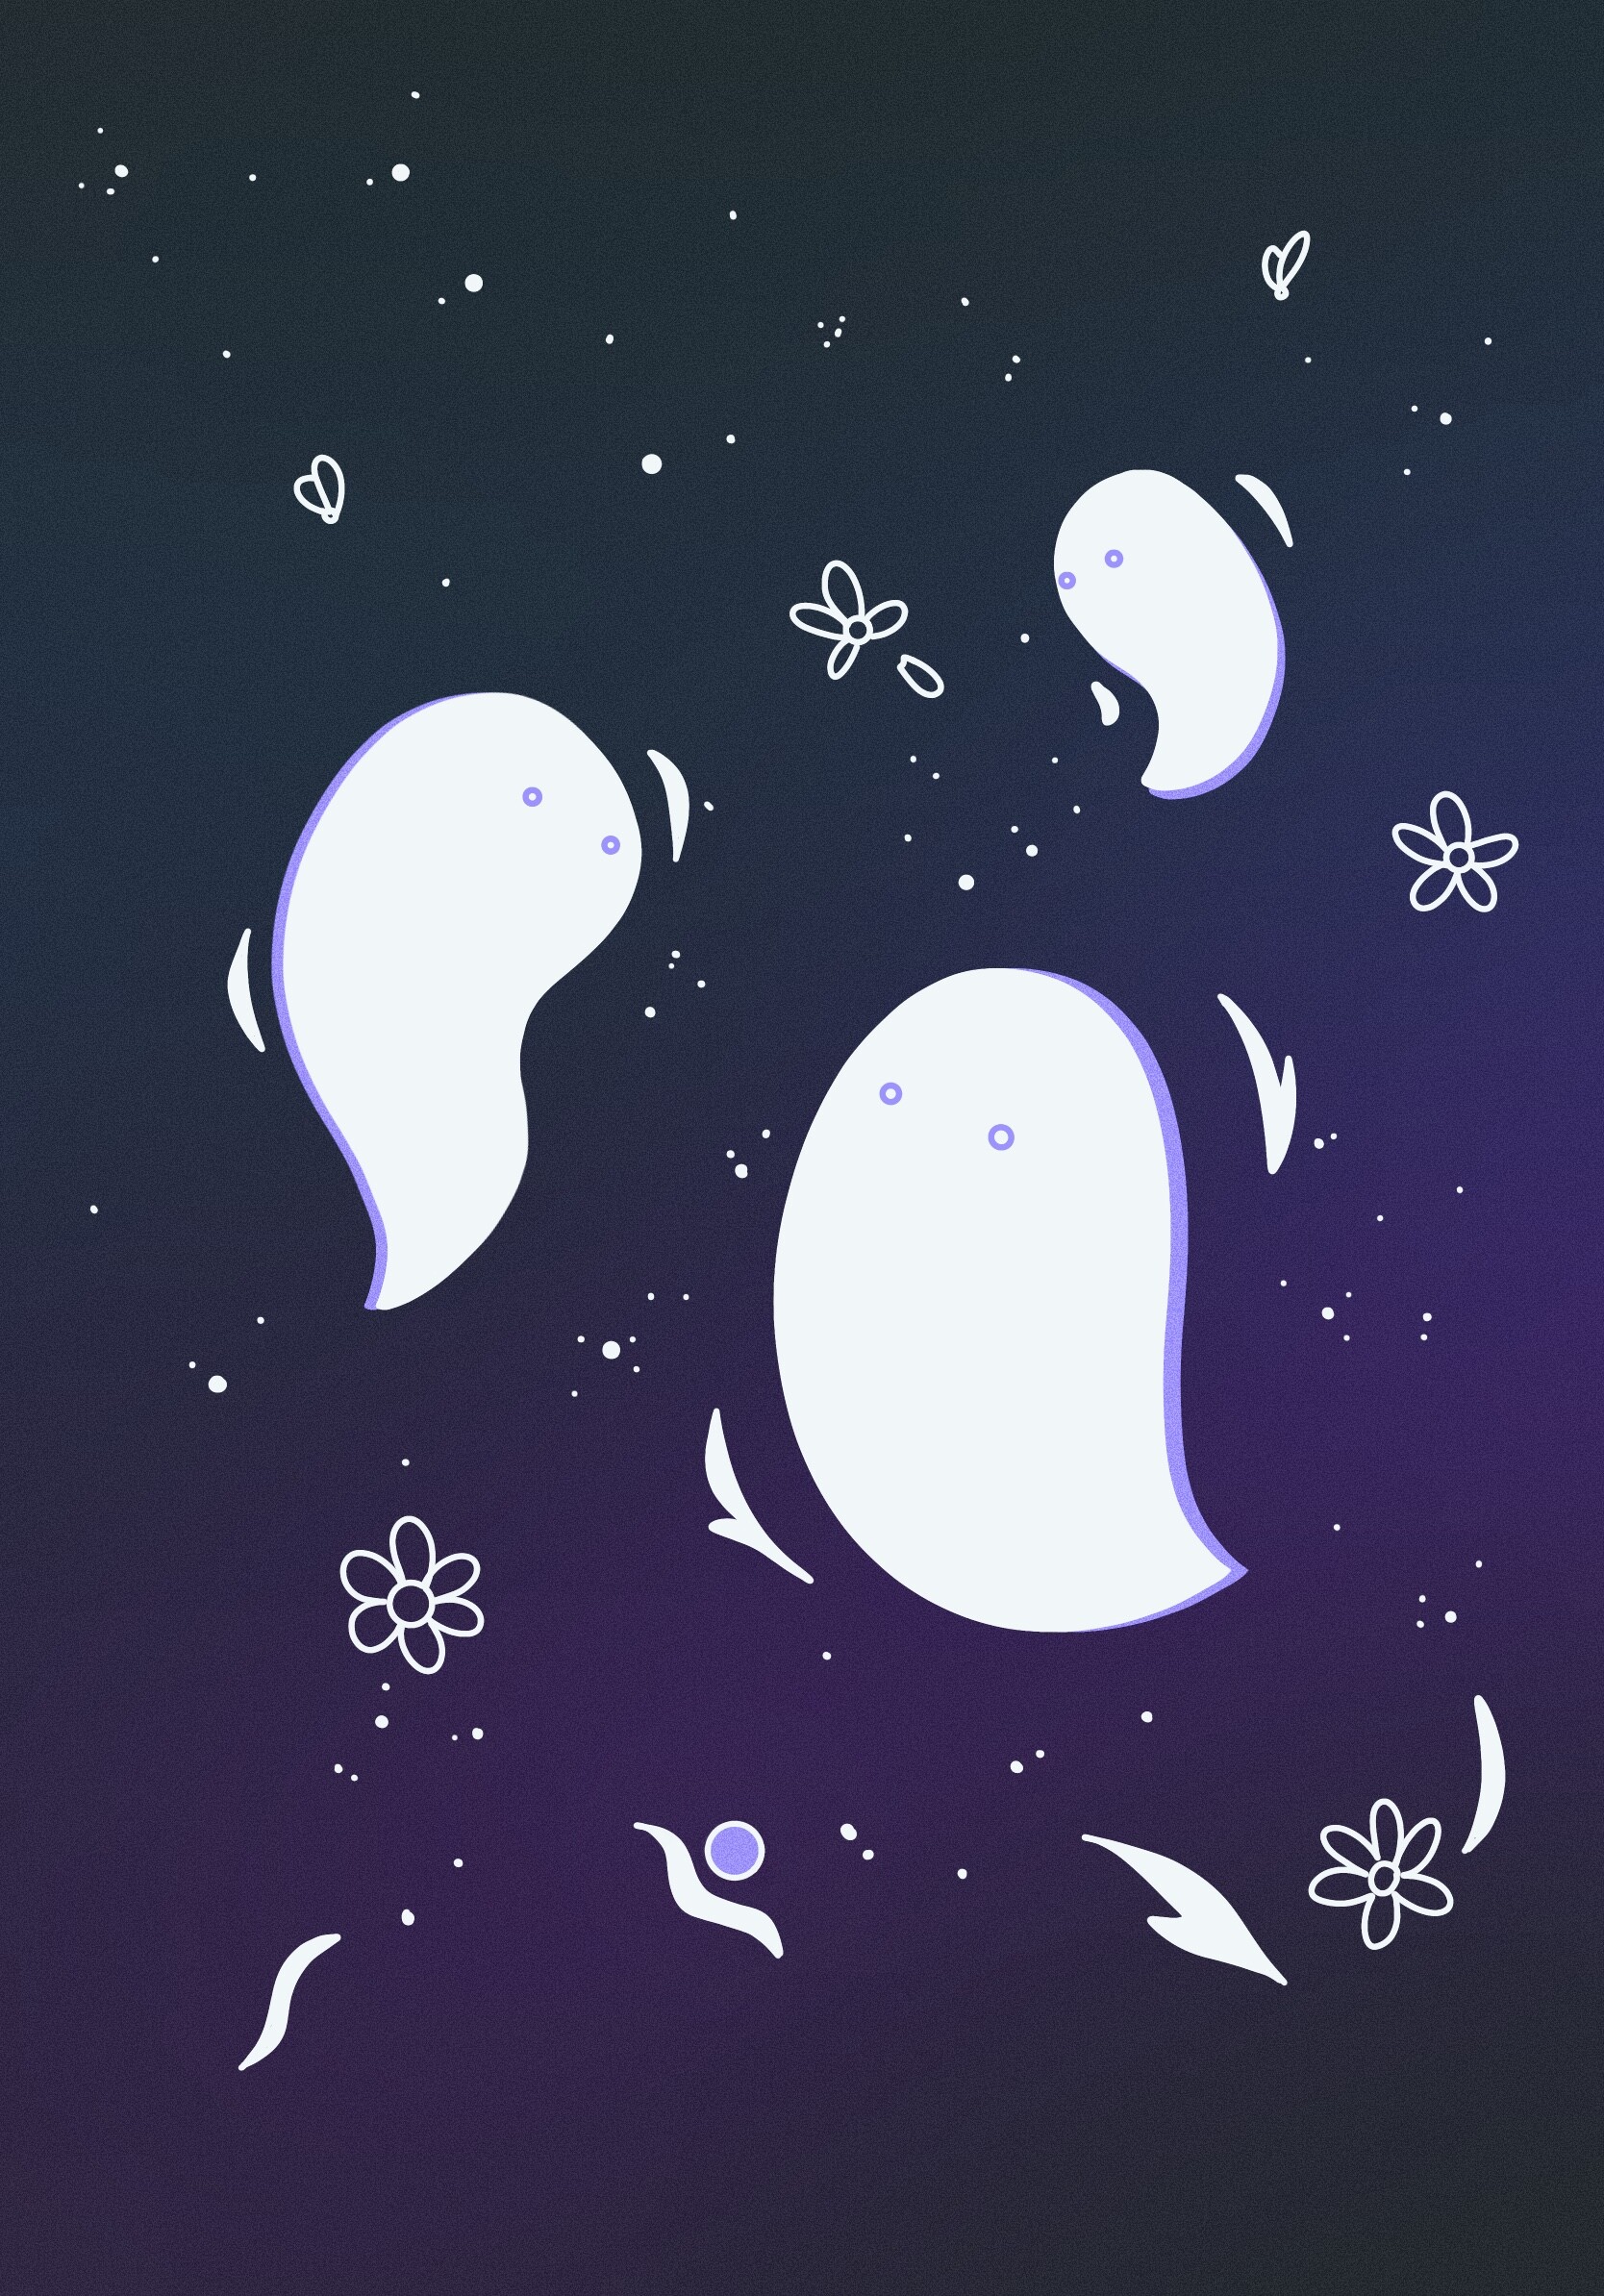 ArtStation - Friendly ghosts